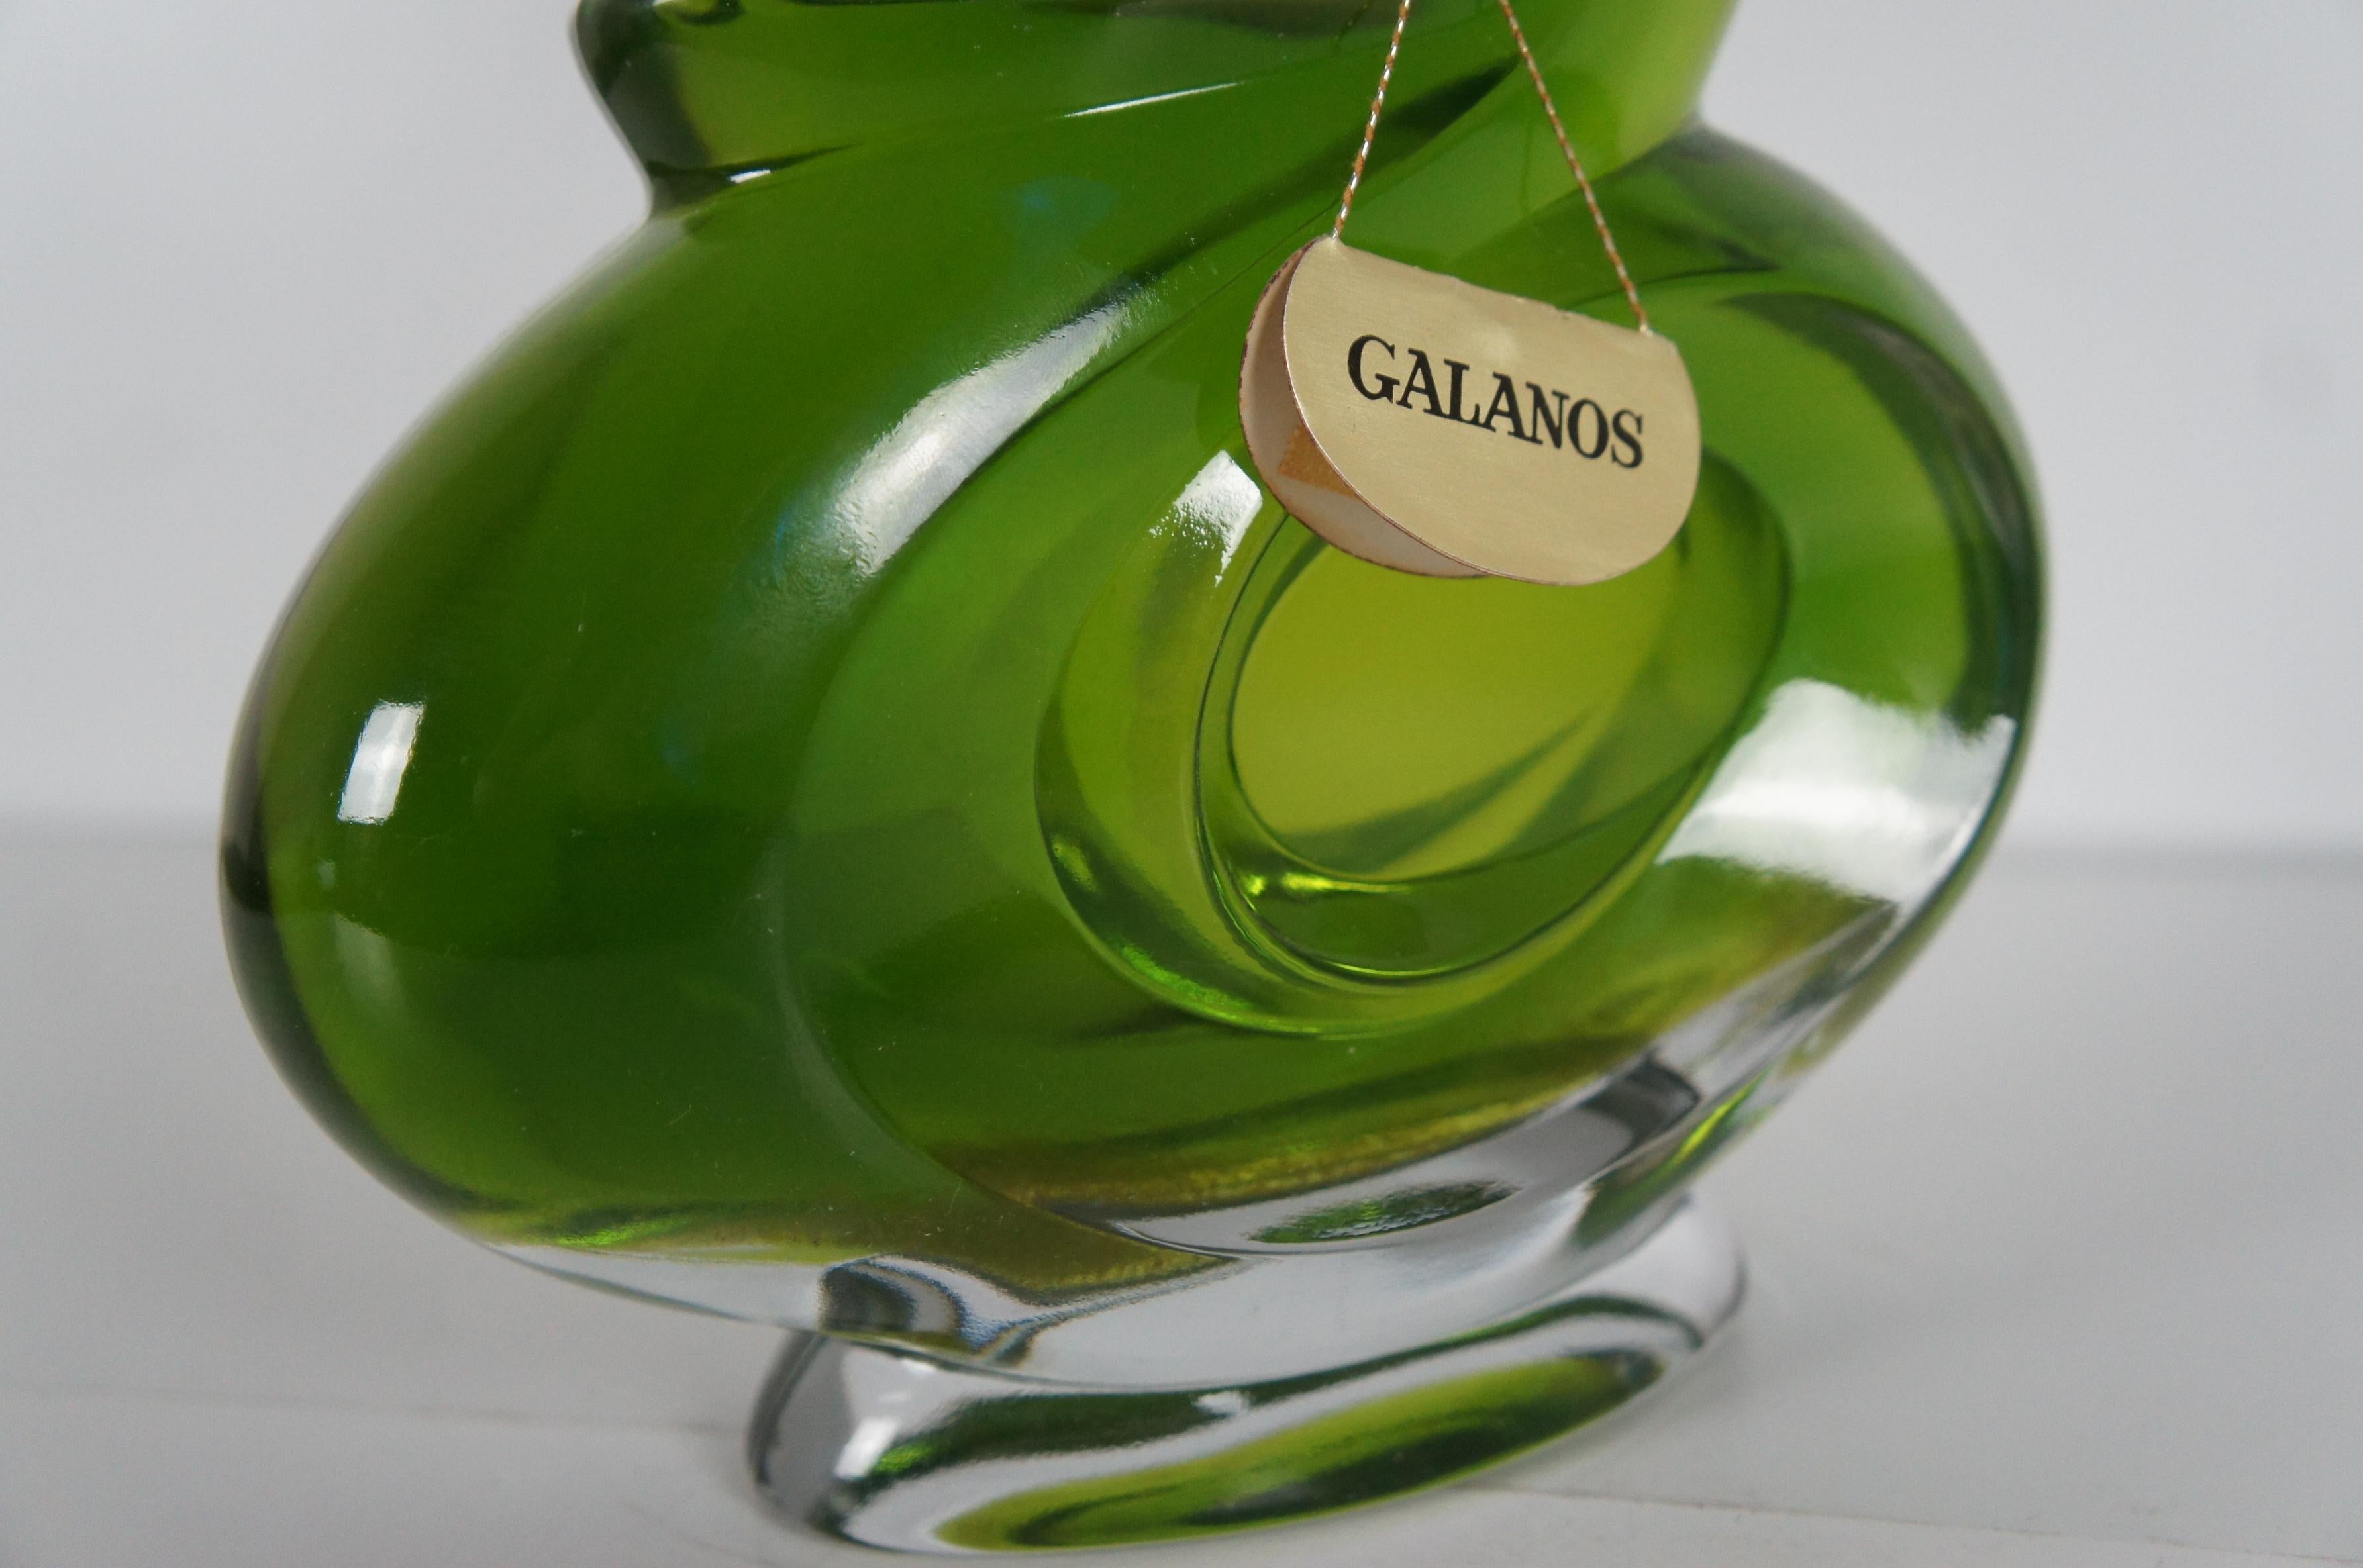 Galanos Designer Fragrance Factice Cologne Perfume Bottle Store Display 2